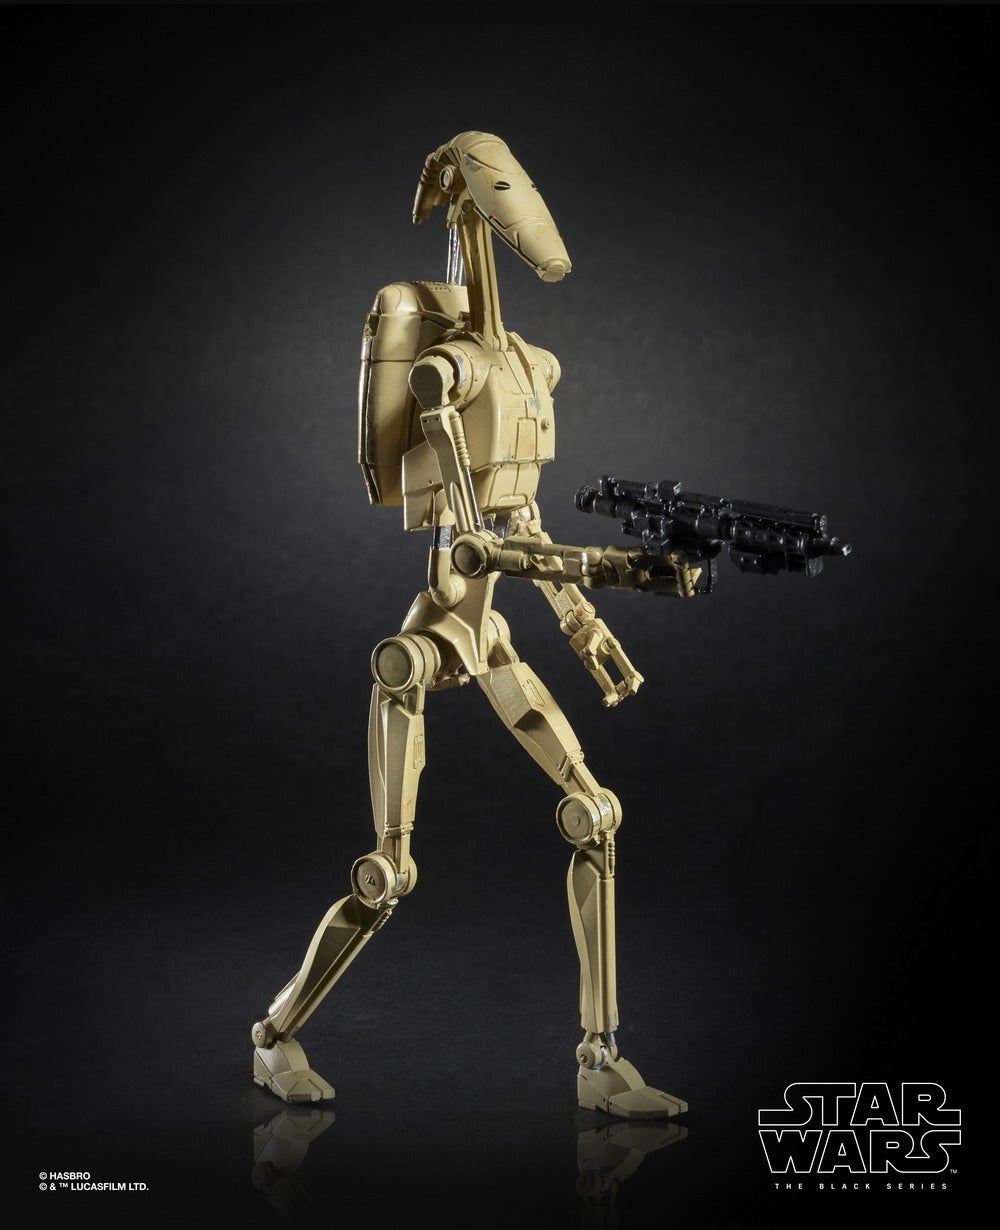 Star Wars The Black Series 6-inch Battle Droid Figure (1)